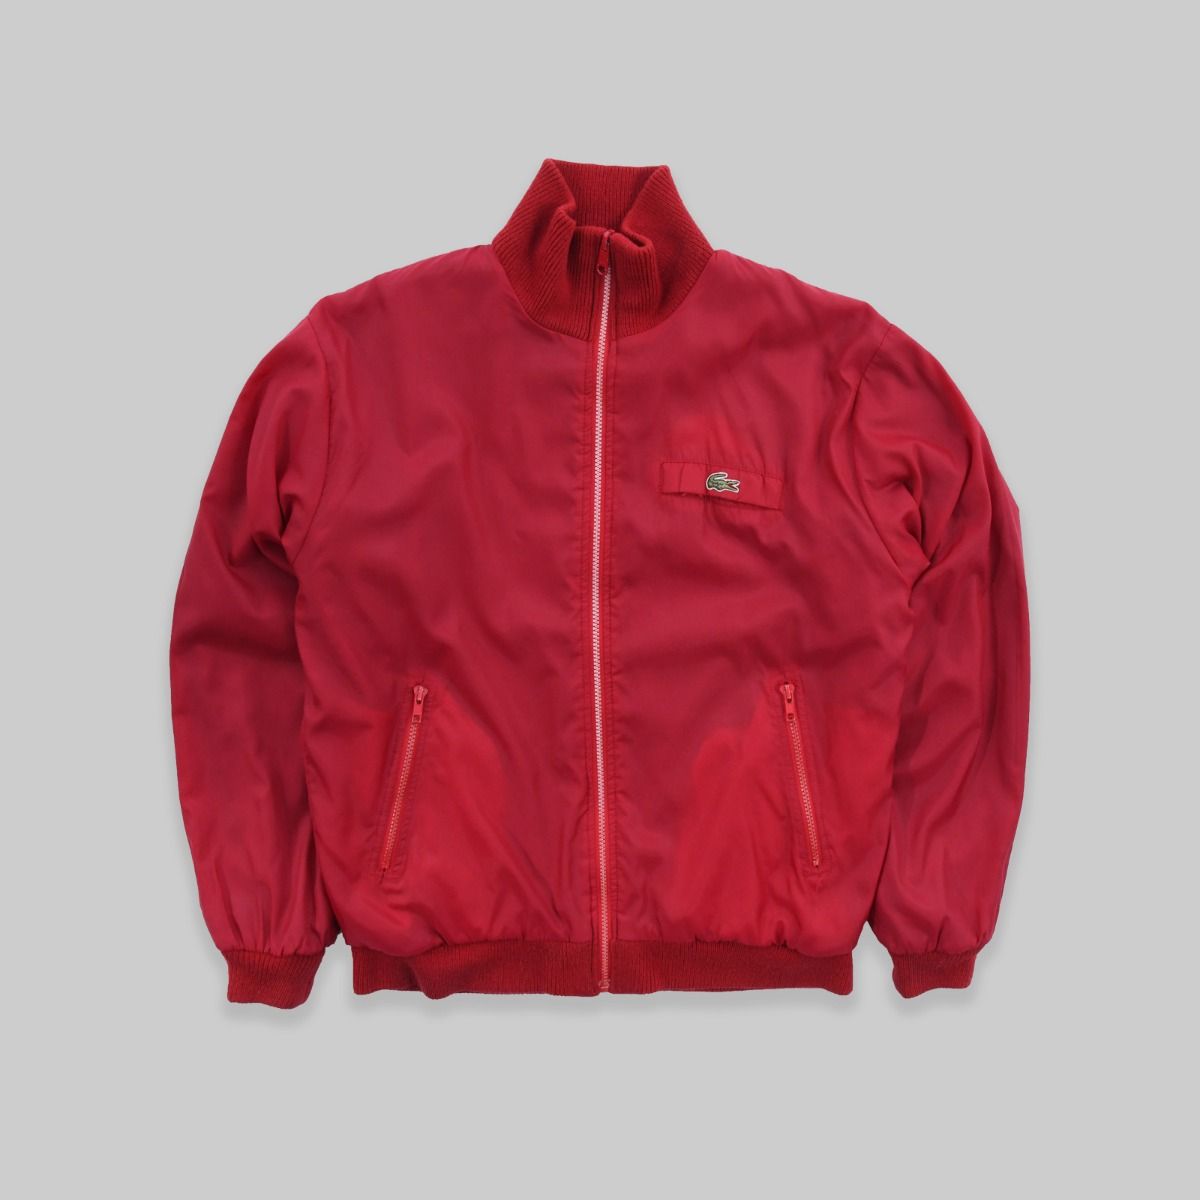 Lacoste Club 1980s Reversible Jacket